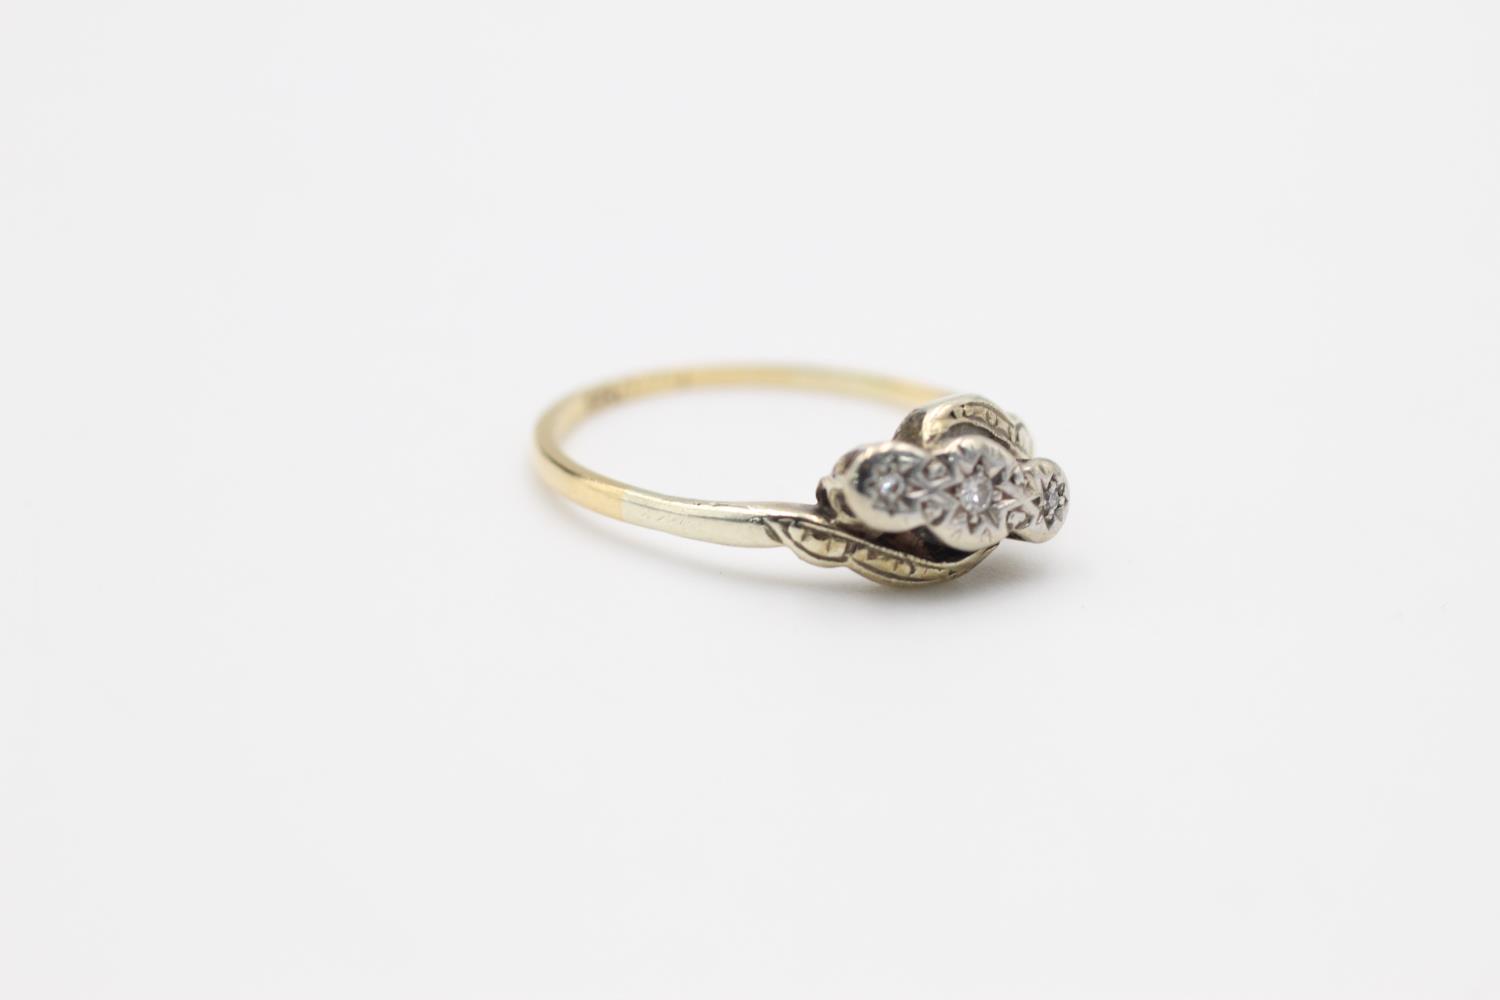 18ct gold diamond twist ring 1.9 grams gross - Image 3 of 6